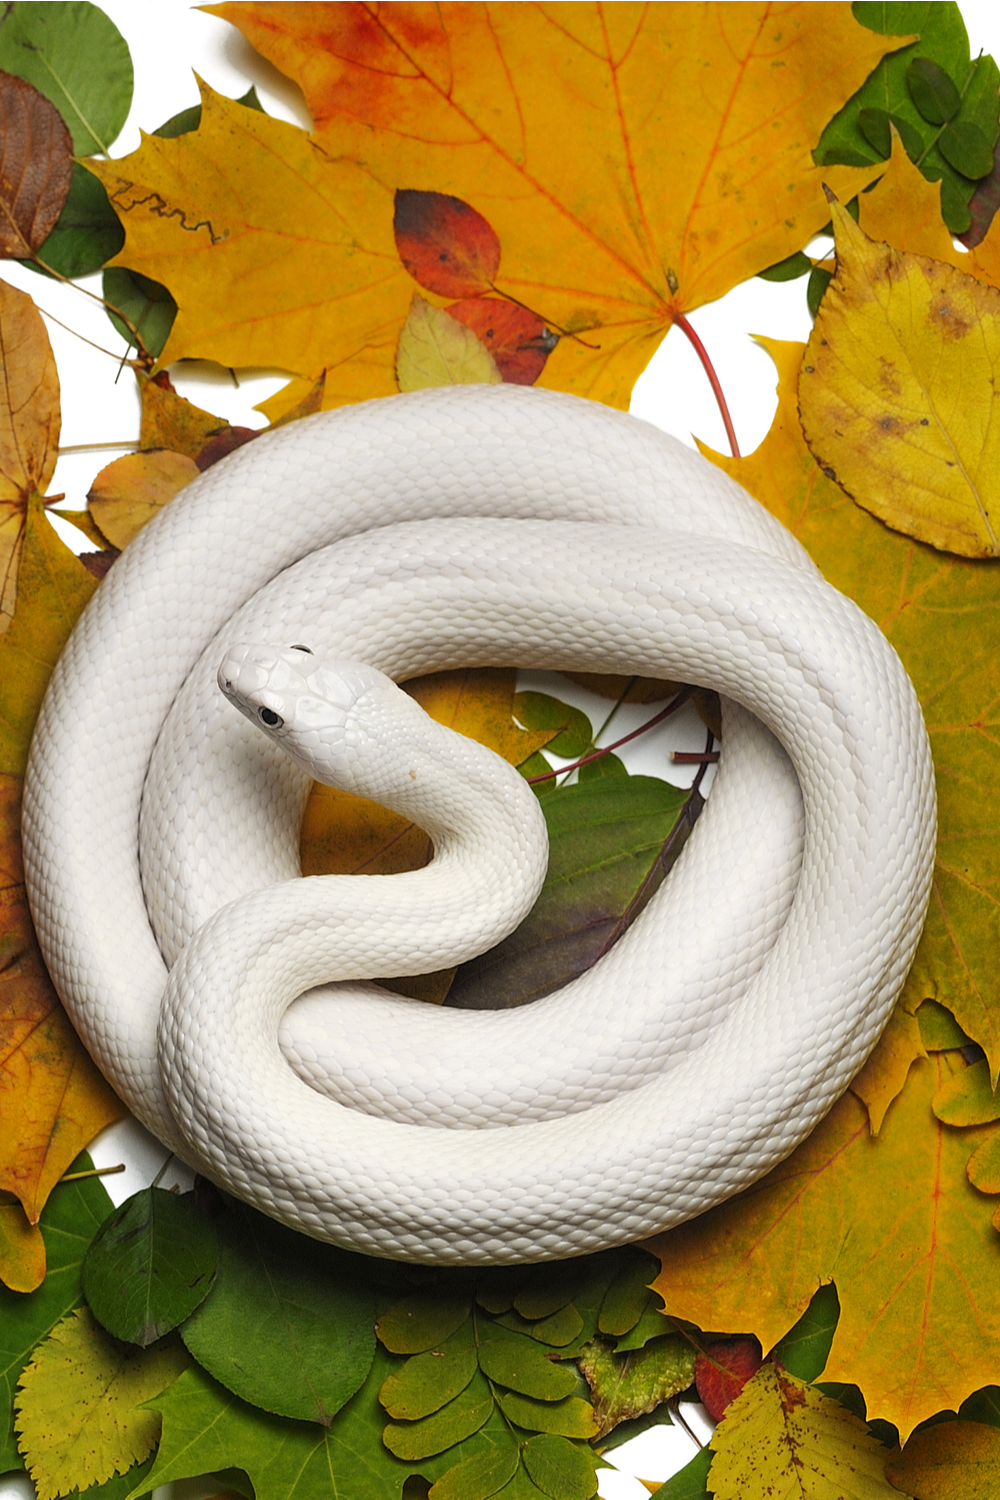 A White Snake